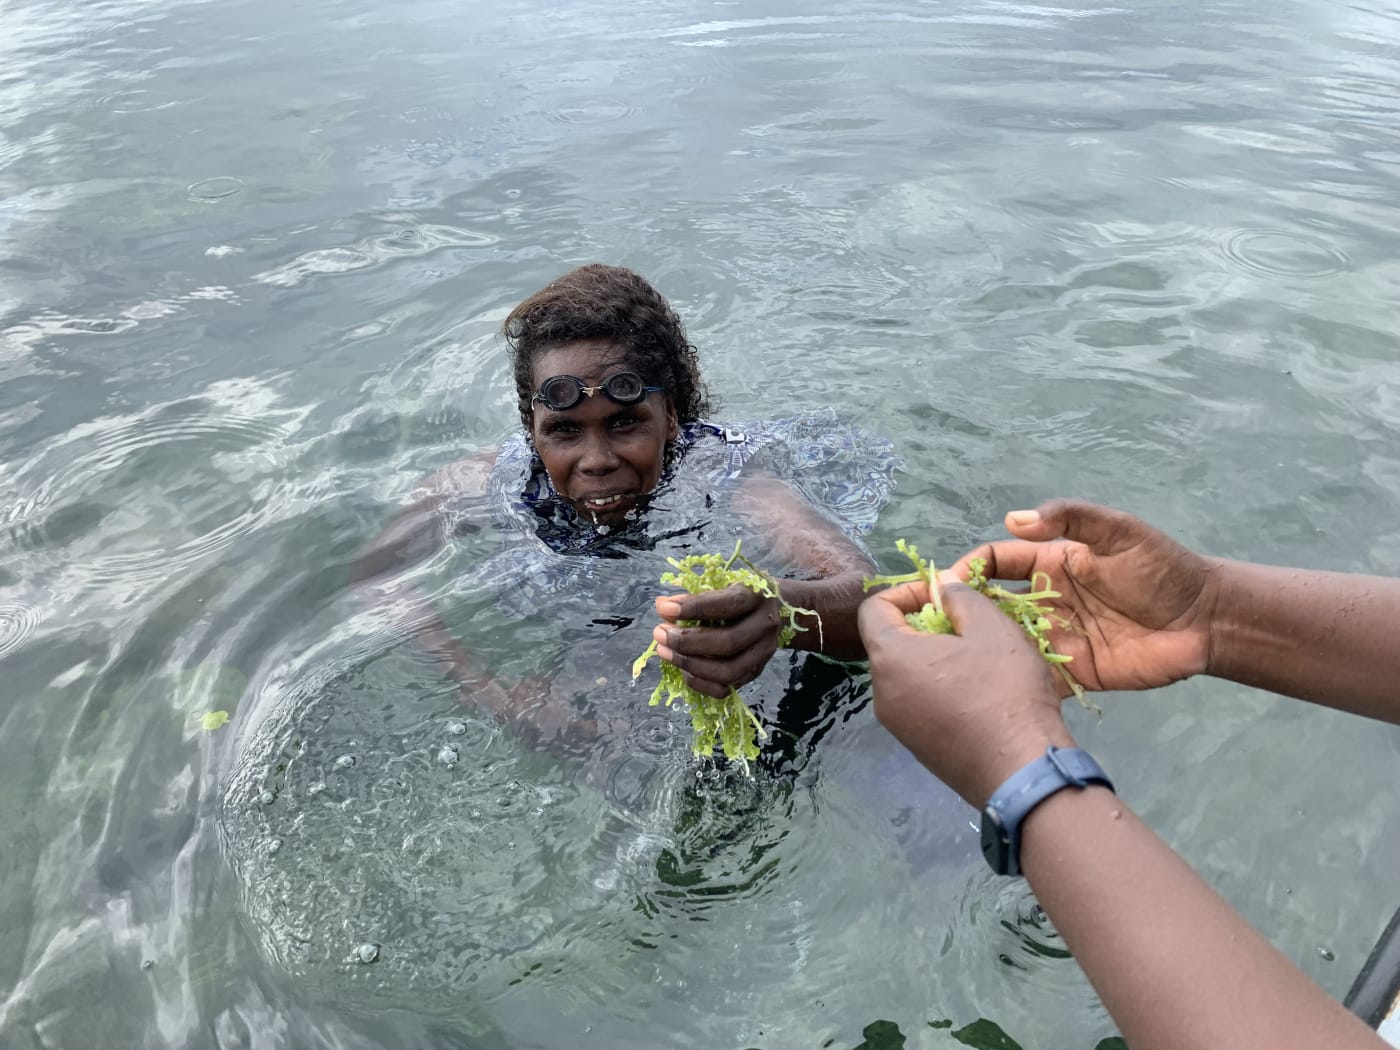 Nerolyn, a community facilitator diving for seagrapes in Solomon Islands